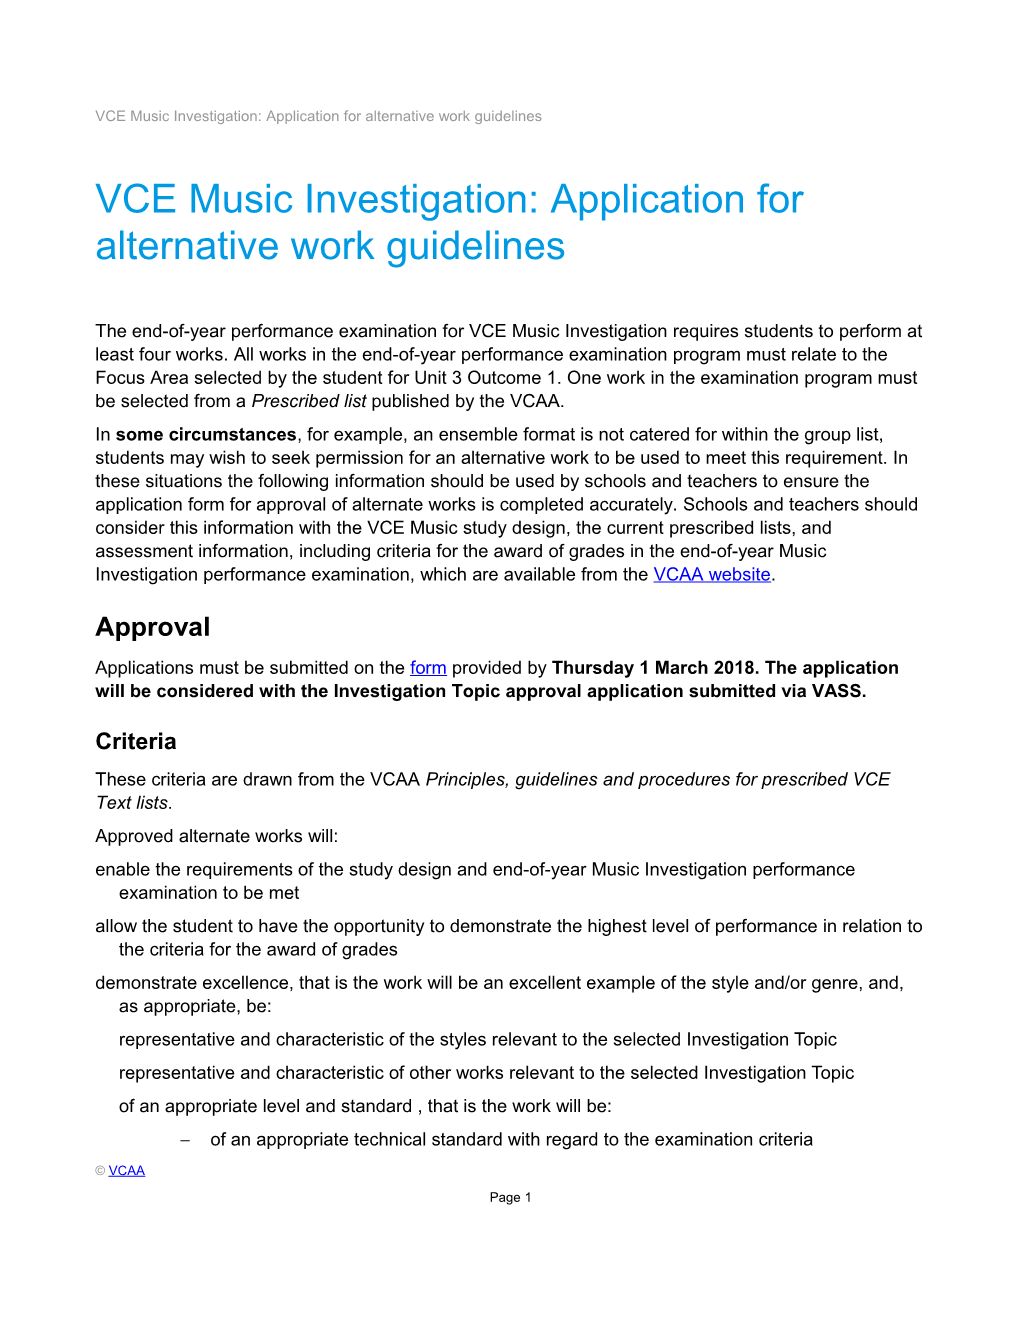 VCE Music Investigation: Application for Alternative Work Guidelines